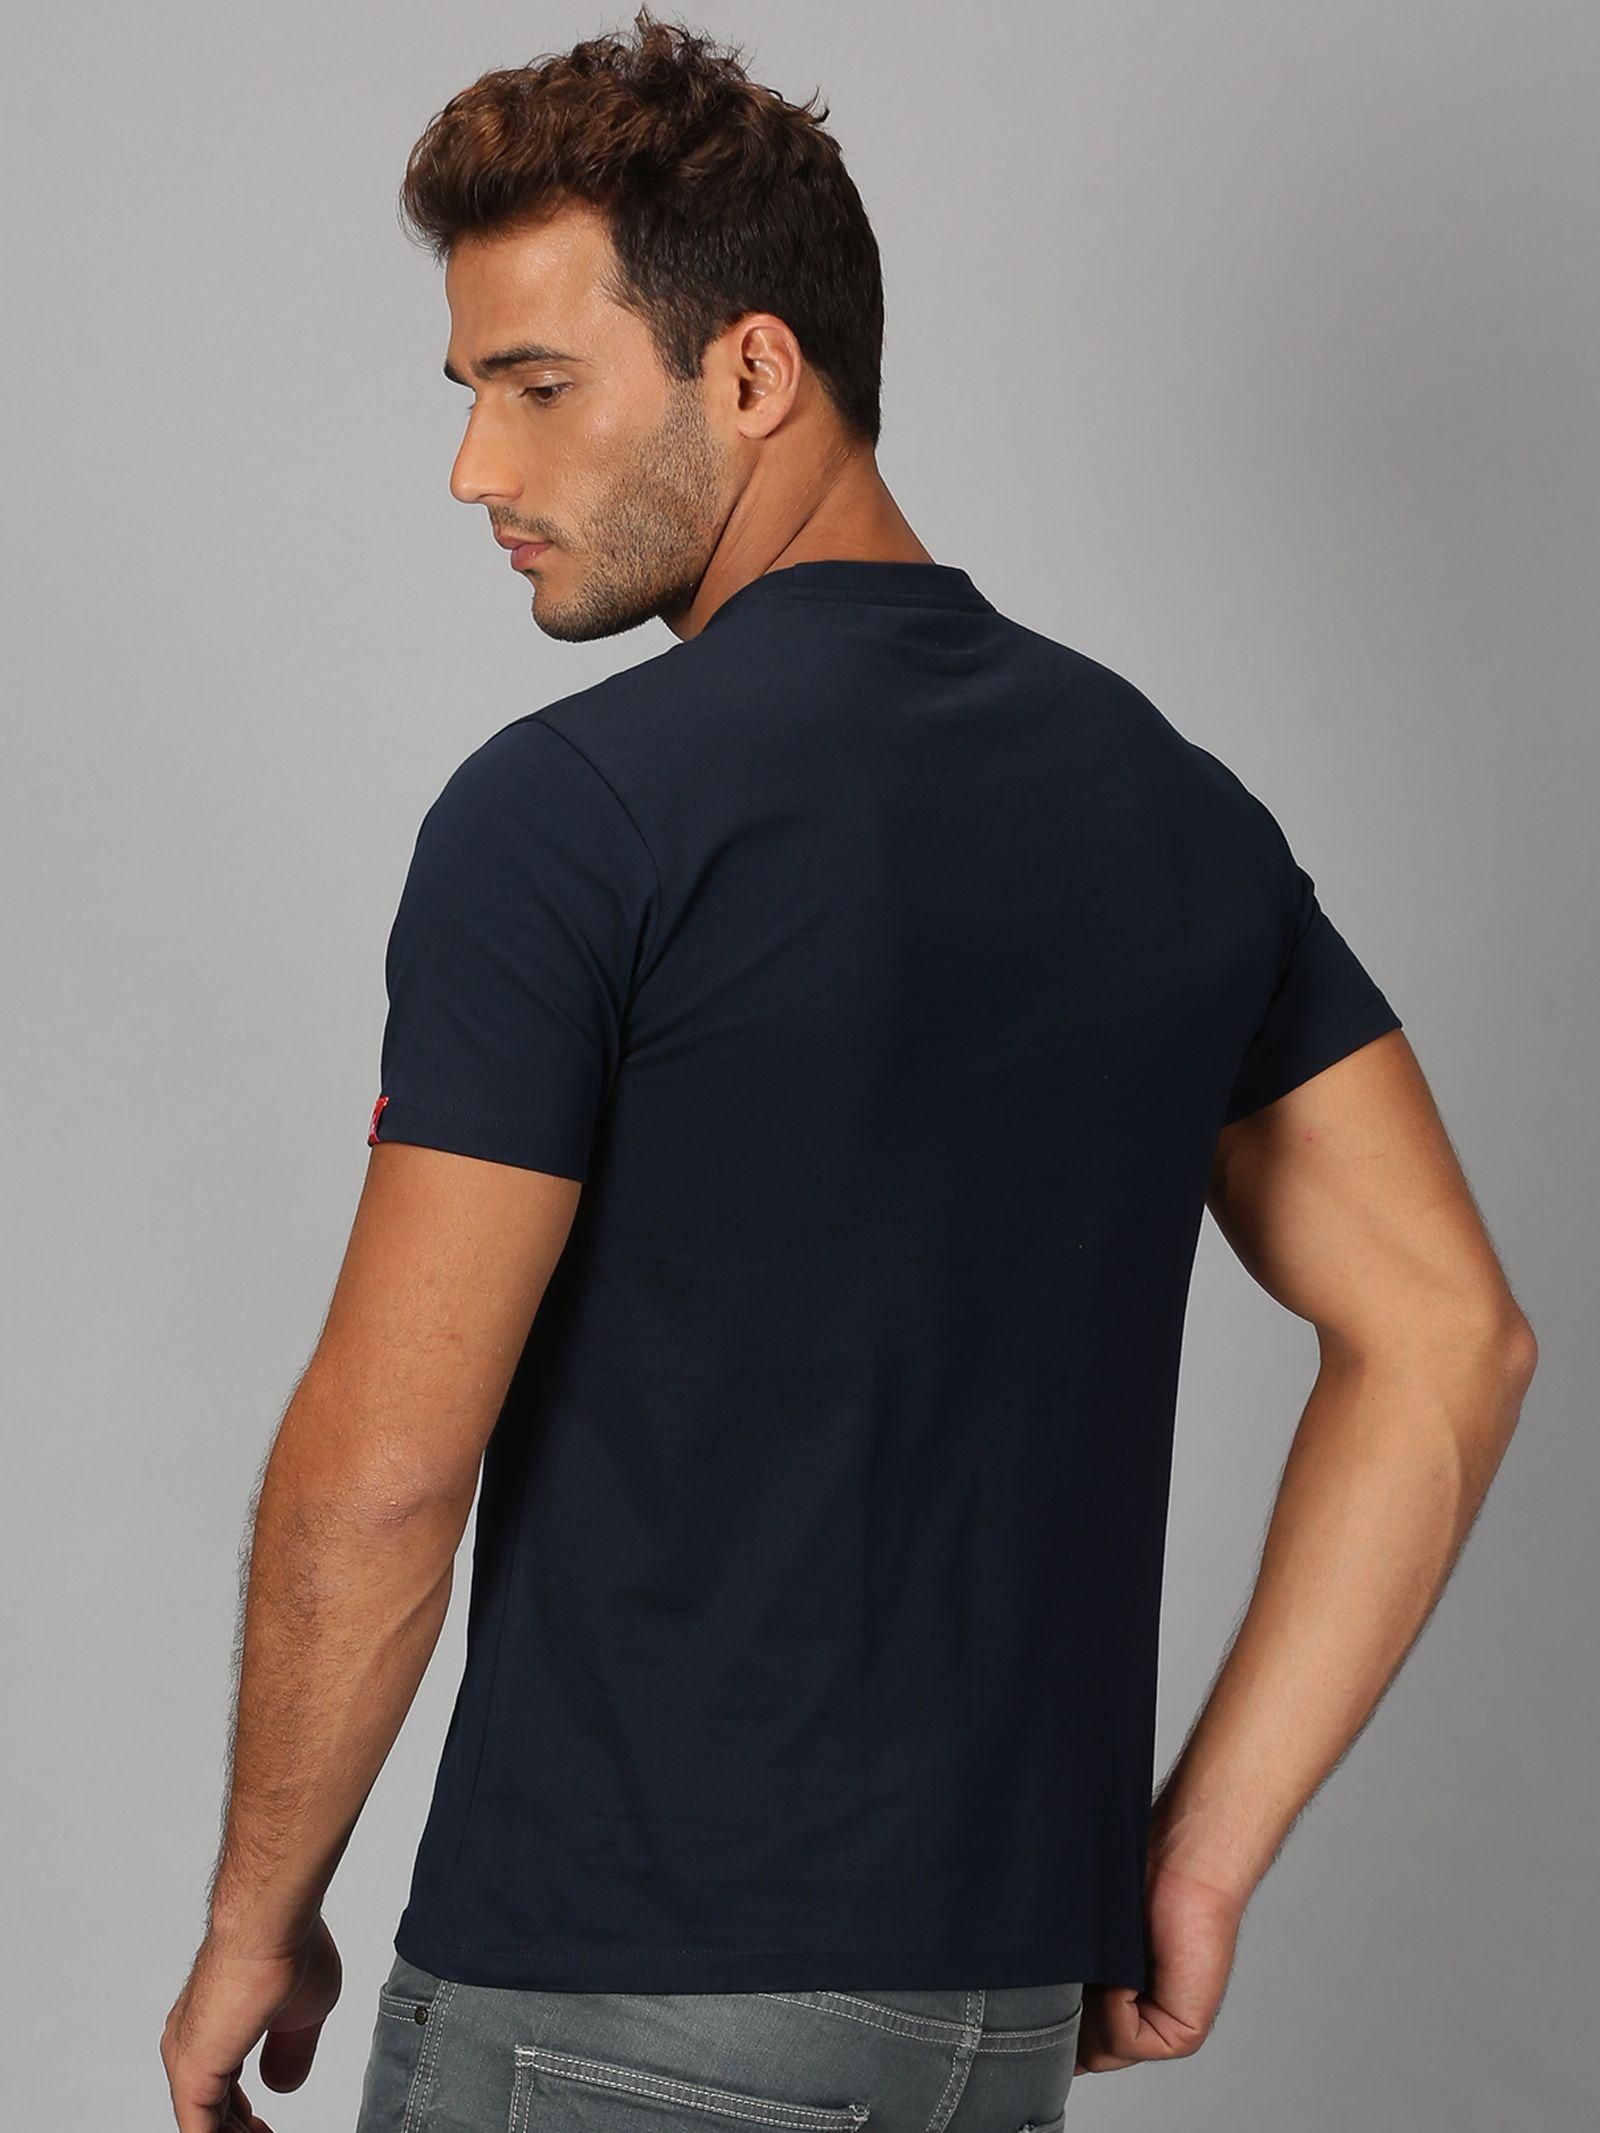 UrGear Cotton Printed Half Sleeves Round Neck Mens T-Shirt